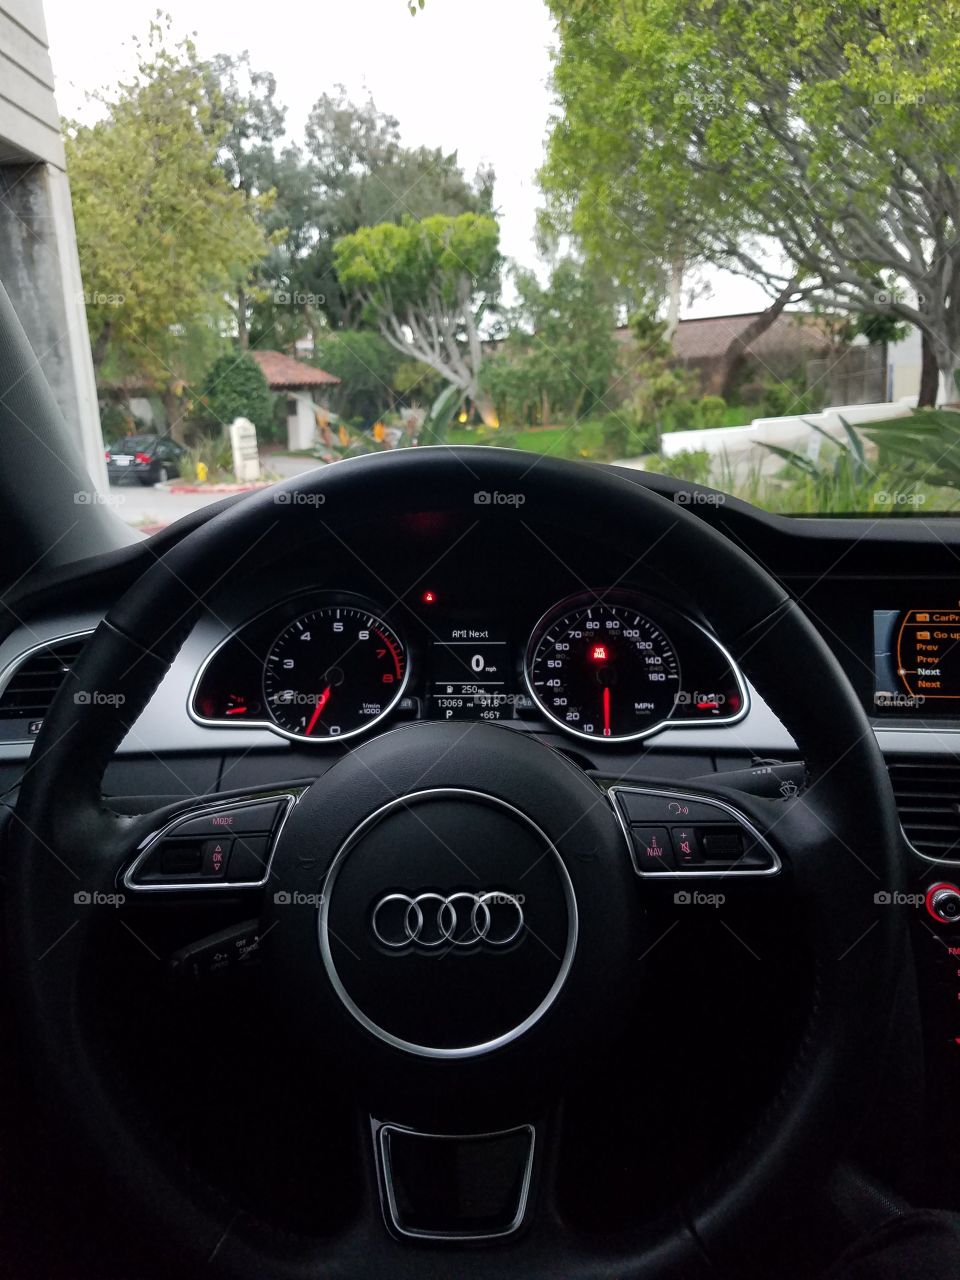 2016 Audi A5 Steering Wheel